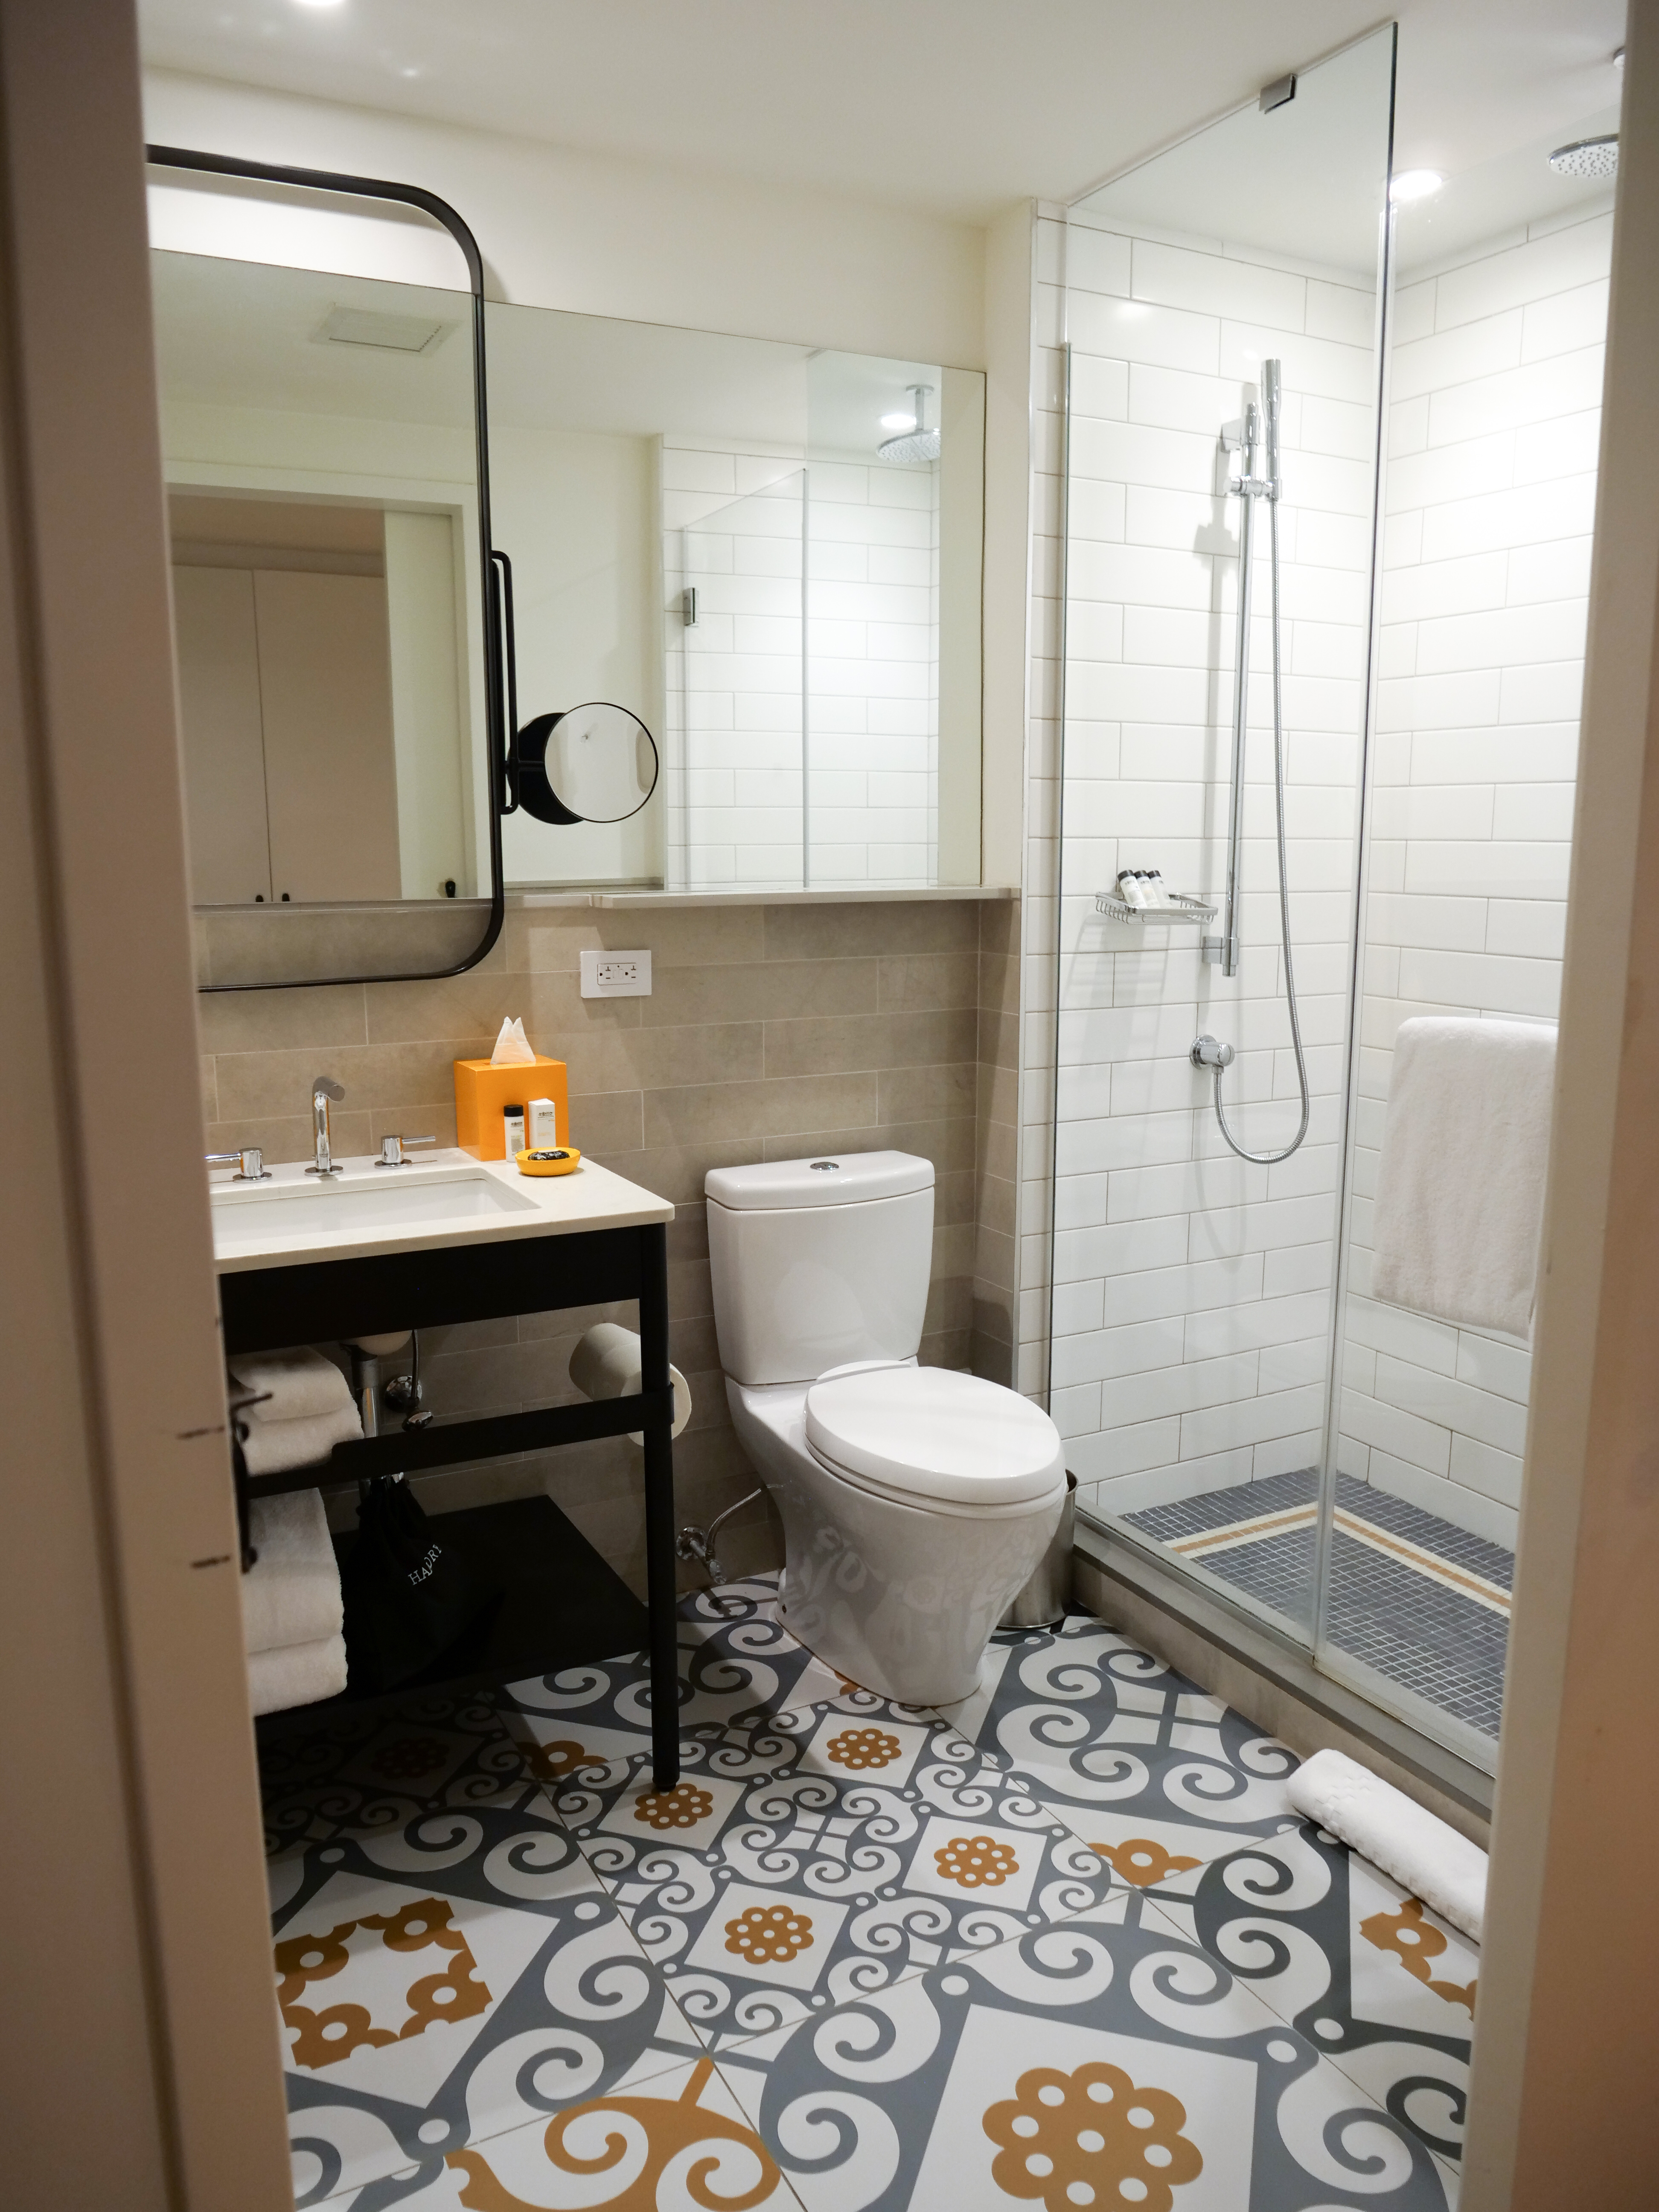 Hotel Indigo Lower East Side LES bathroom toilet tile floor shower